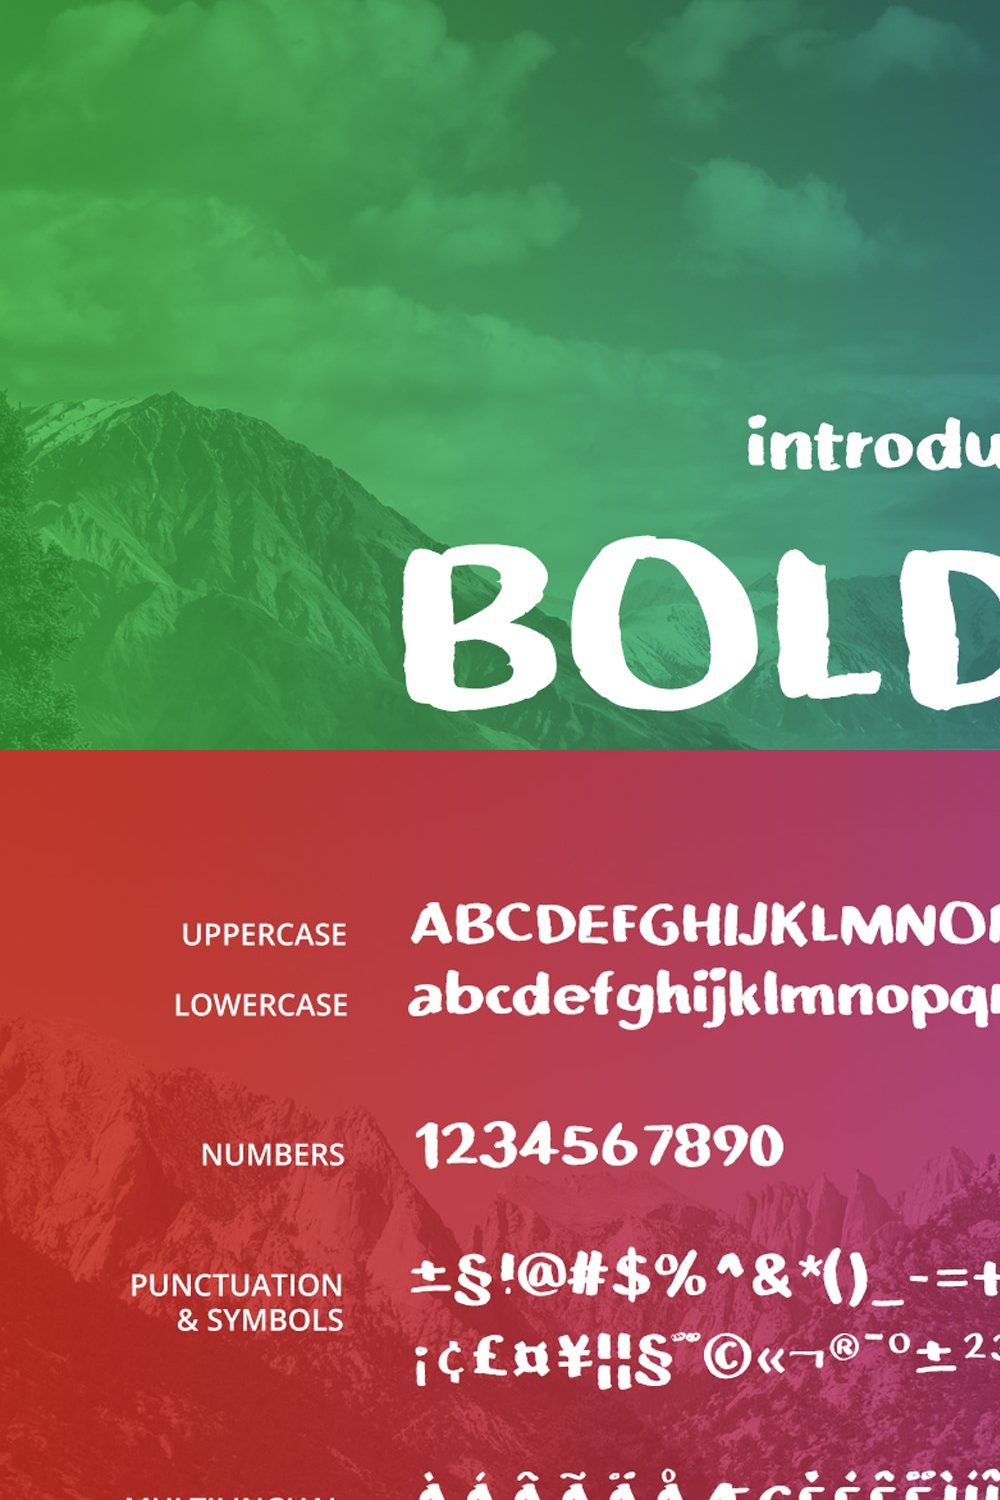 Boldera brush font pinterest preview image.